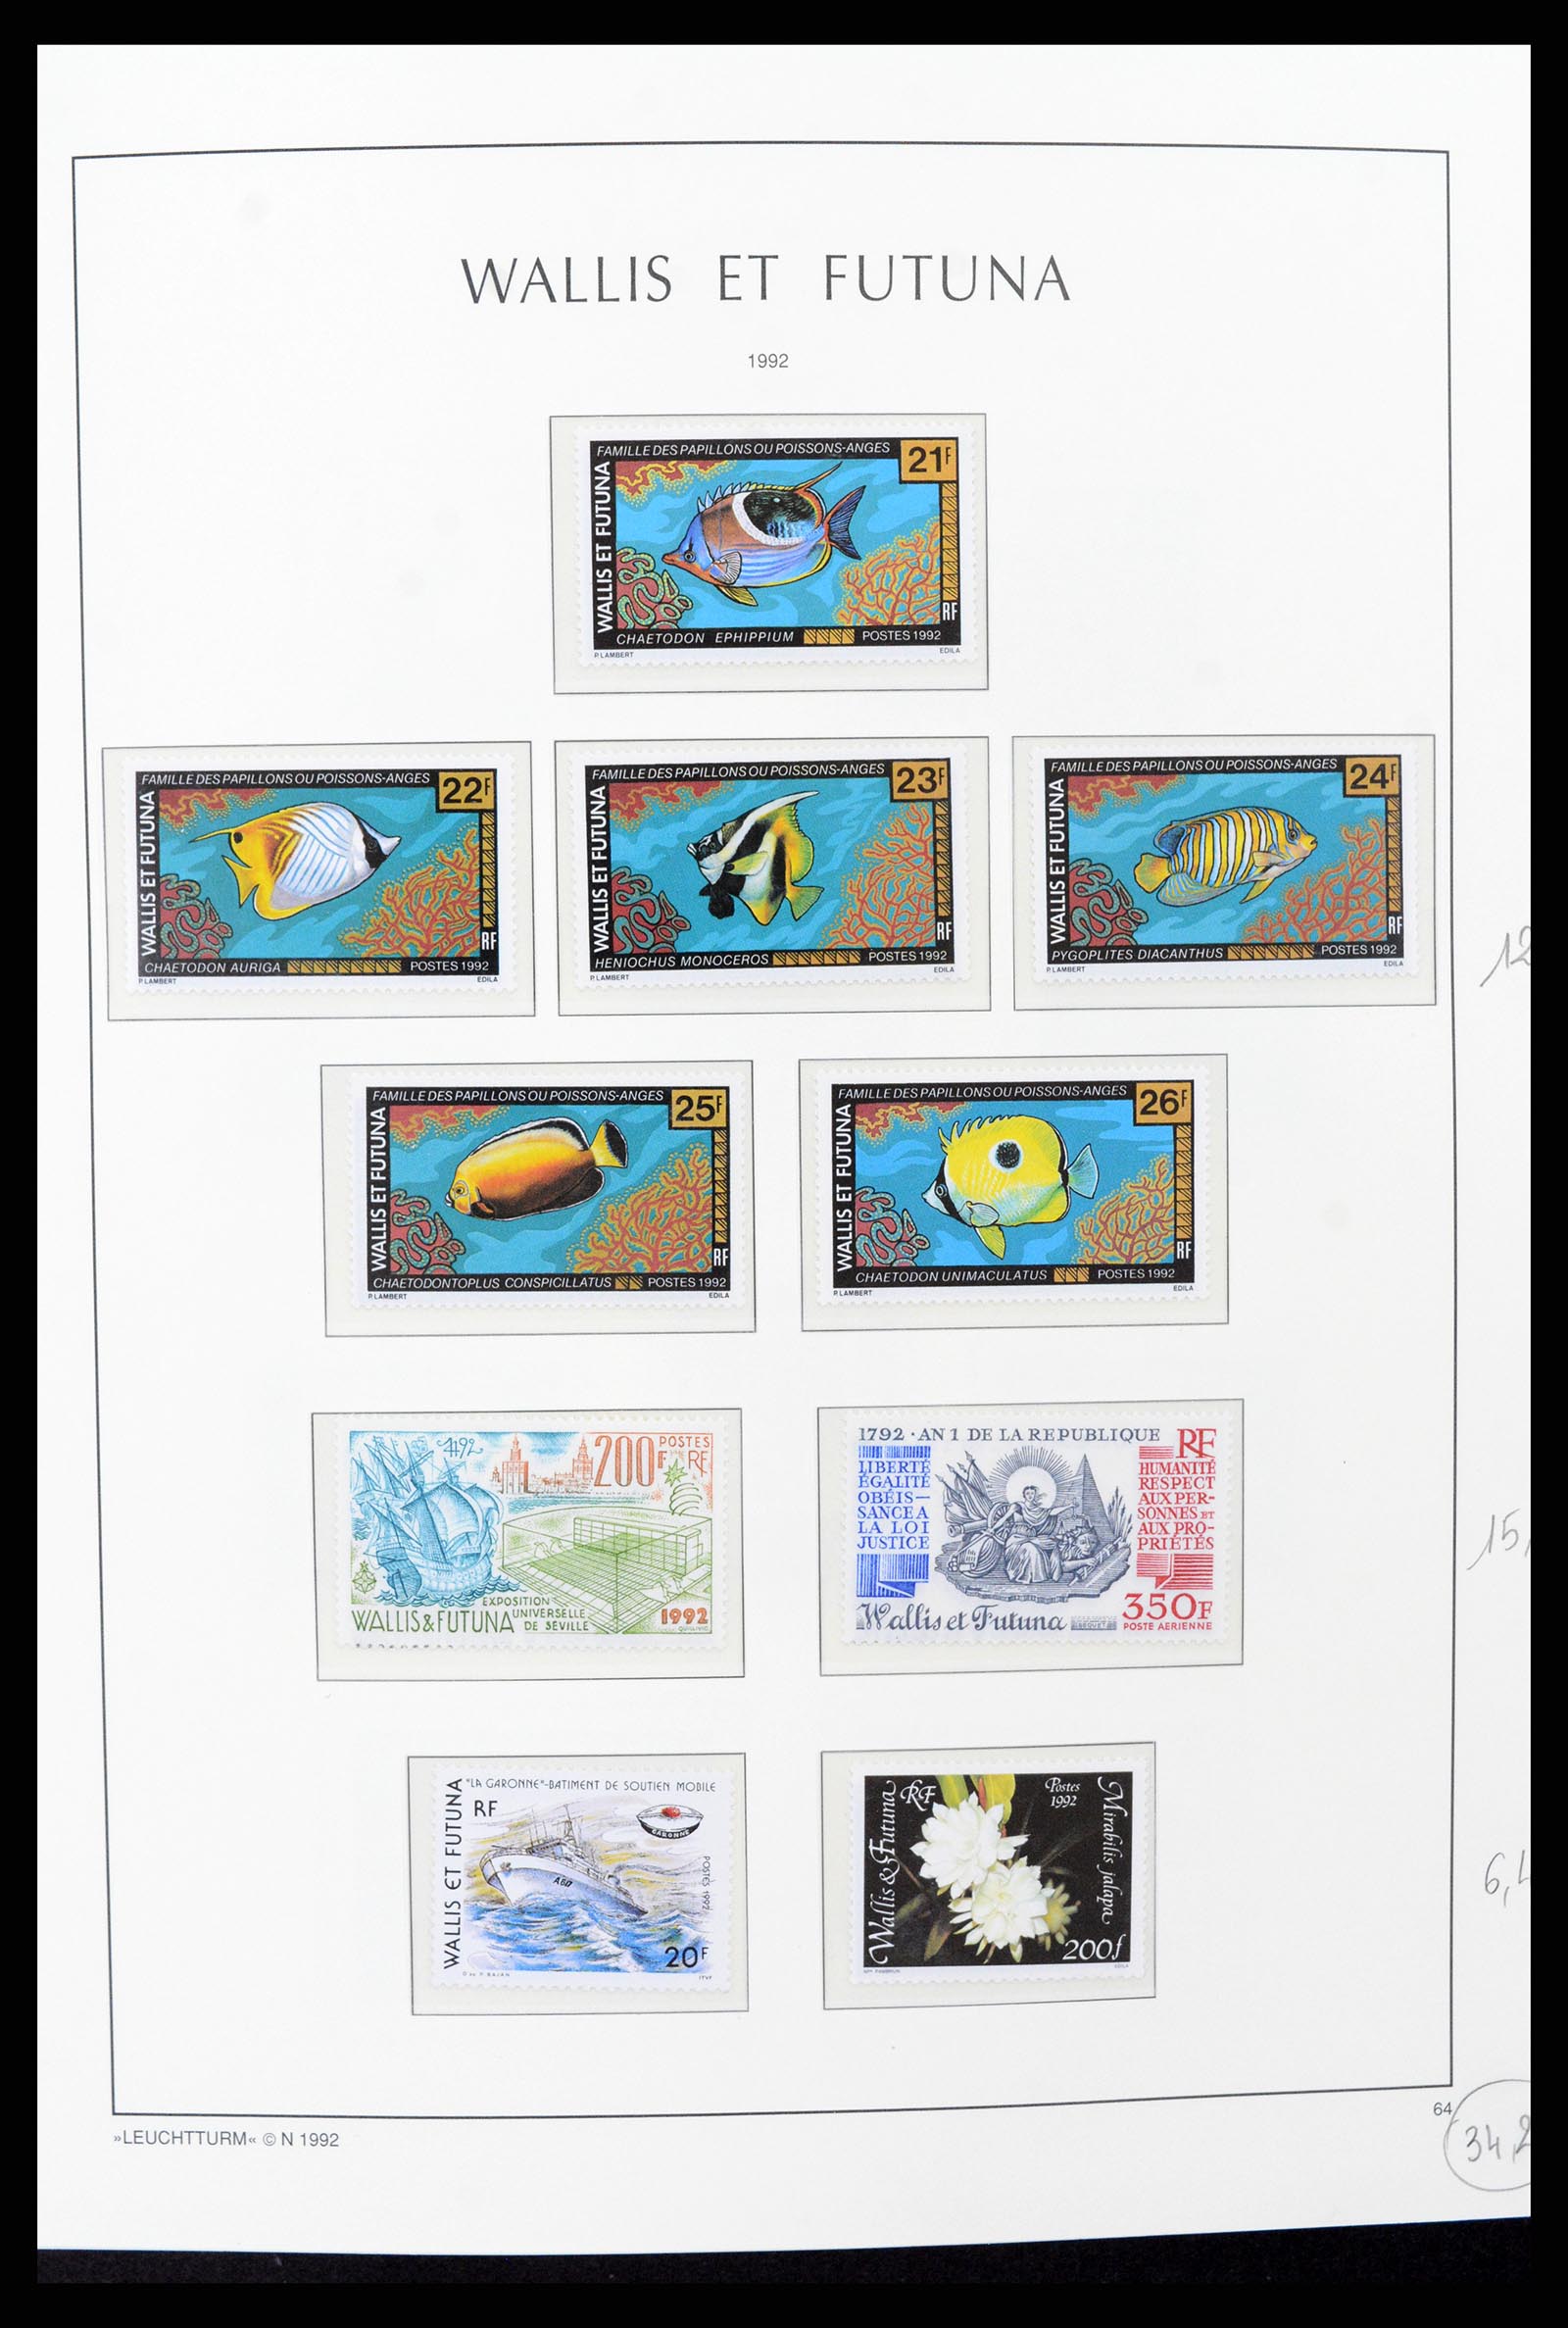 37316 031 - Stamp collection 37316 Wallis et Futuna 1980-2018!